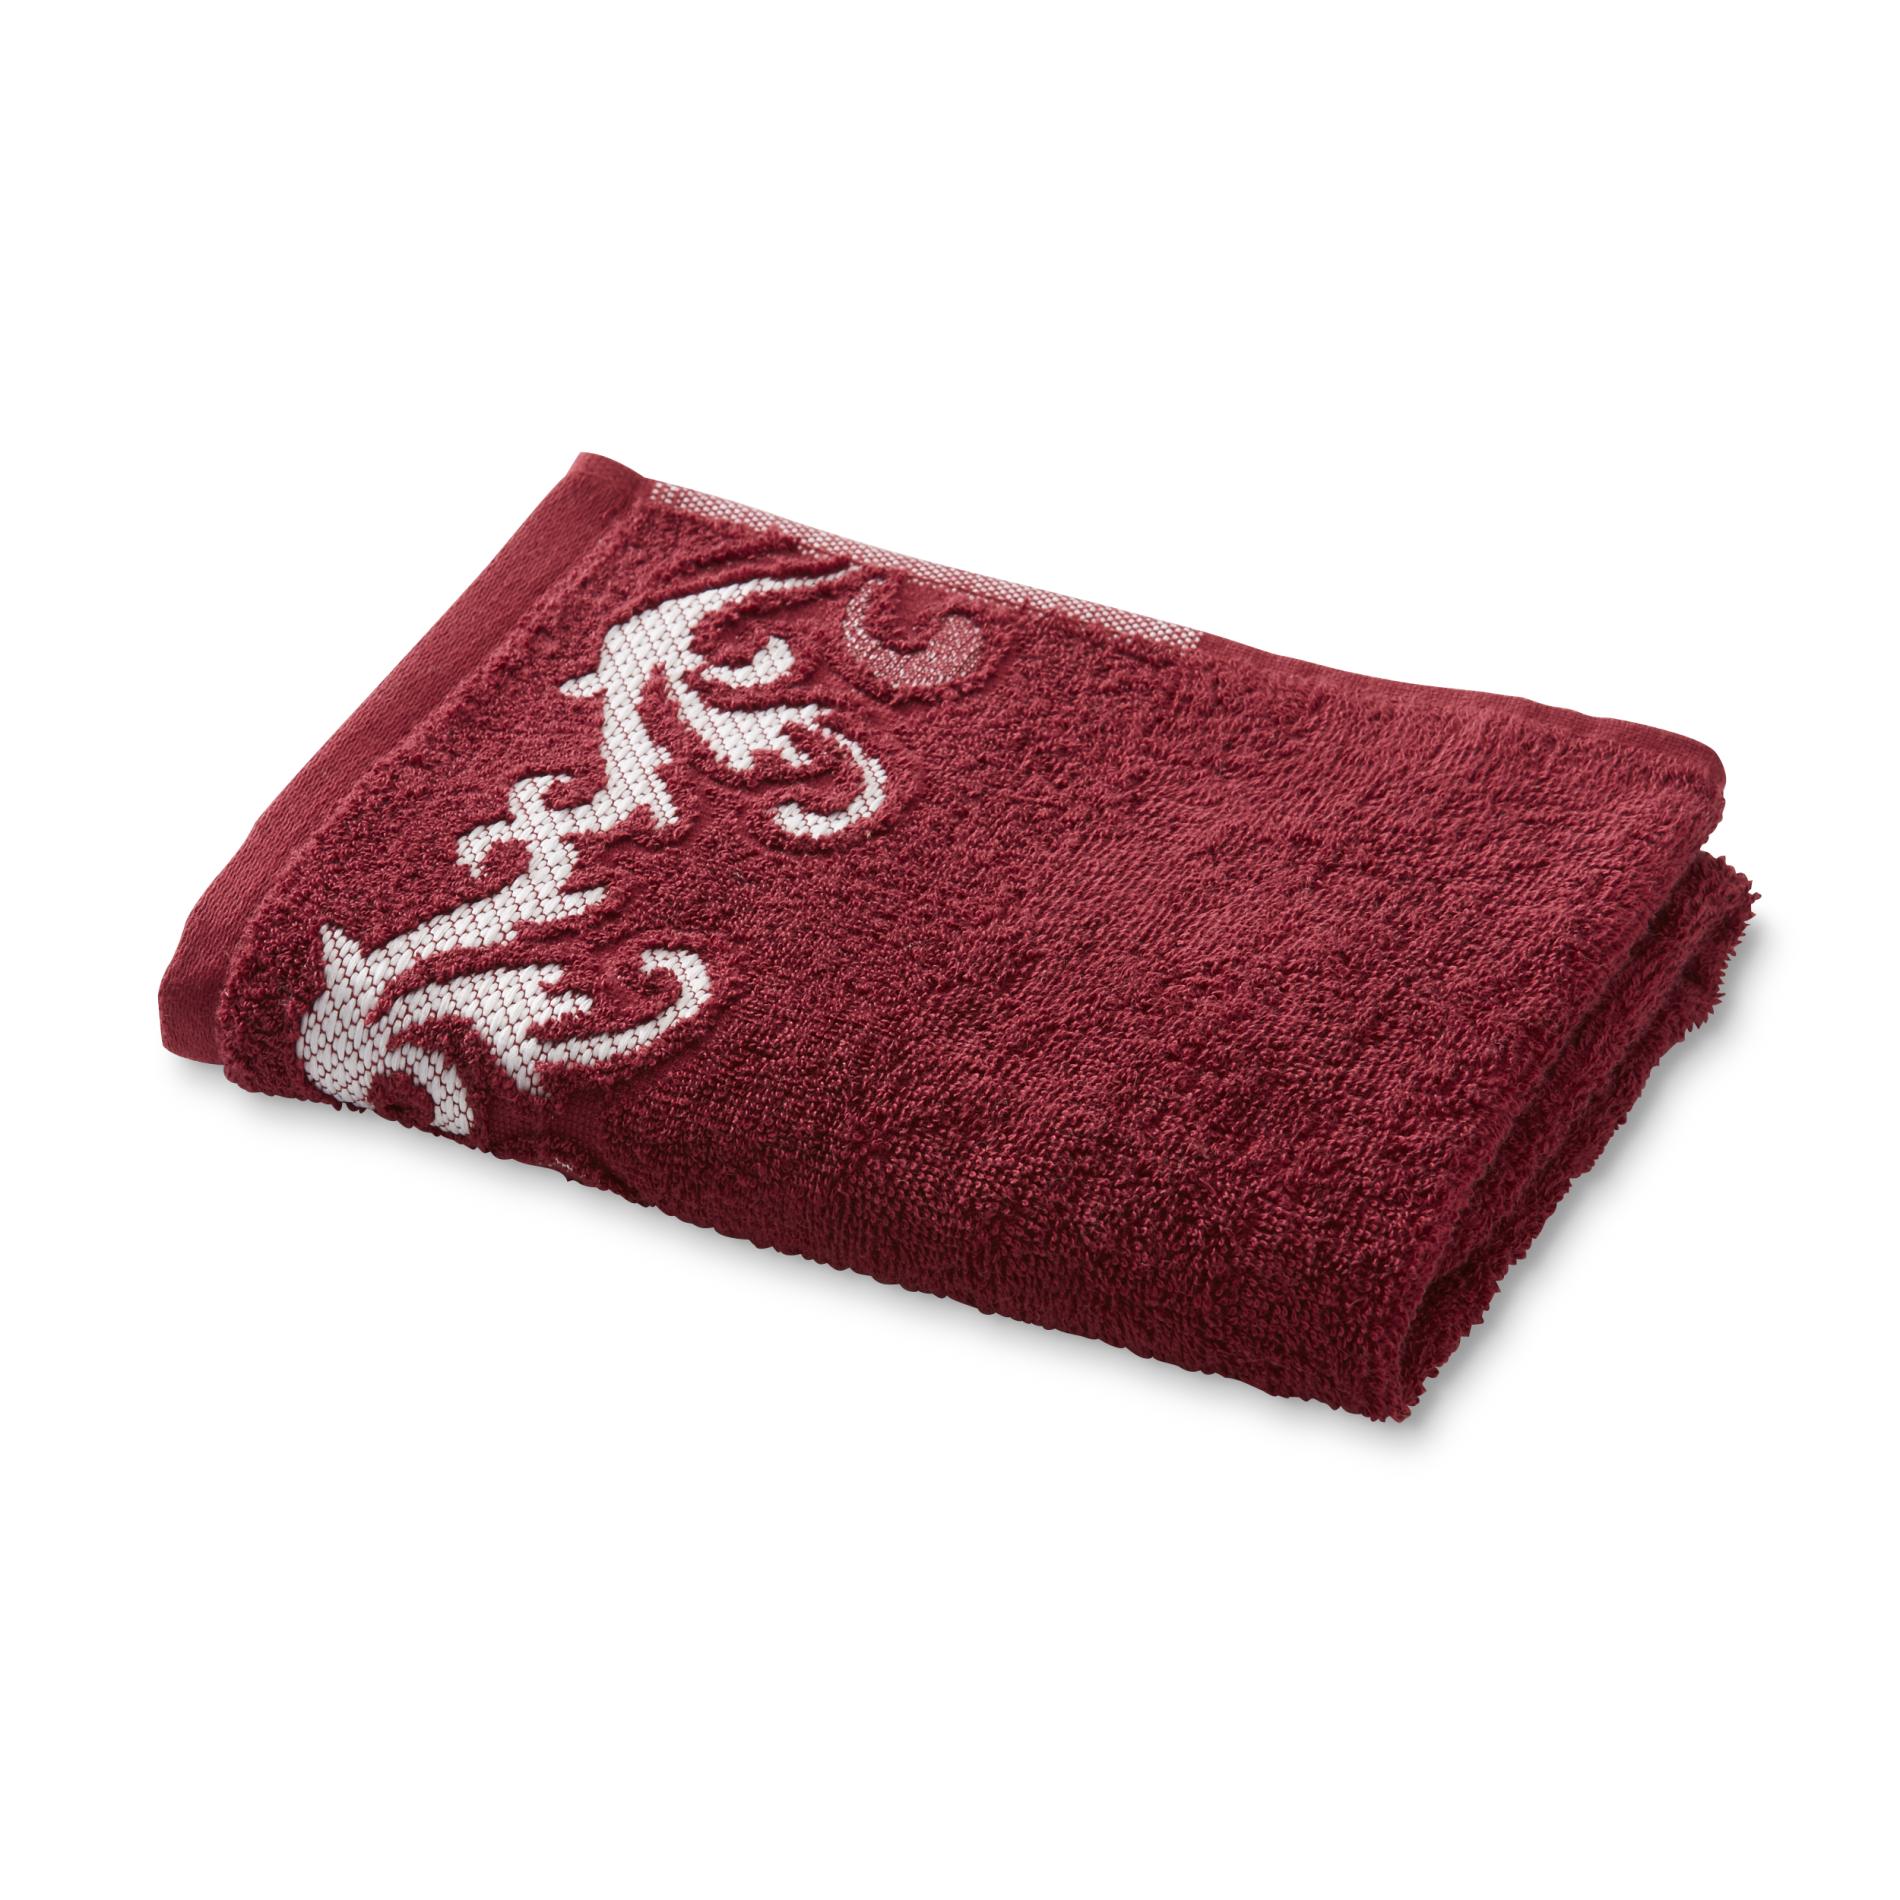 Decorative Towel - Brocade